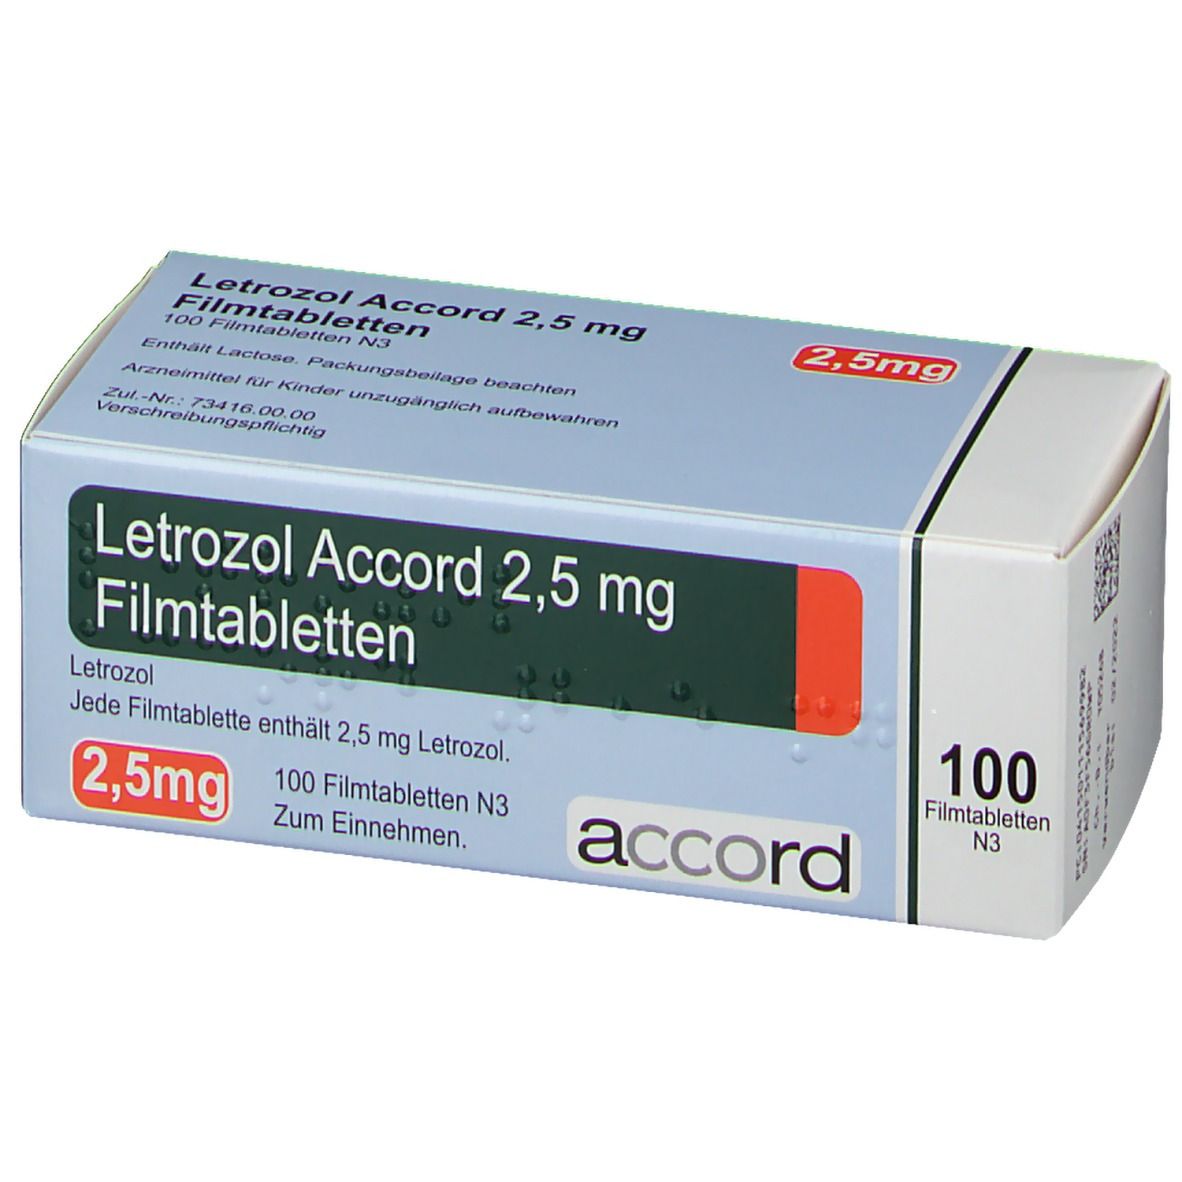 Letrozol Accord 2,5 mg